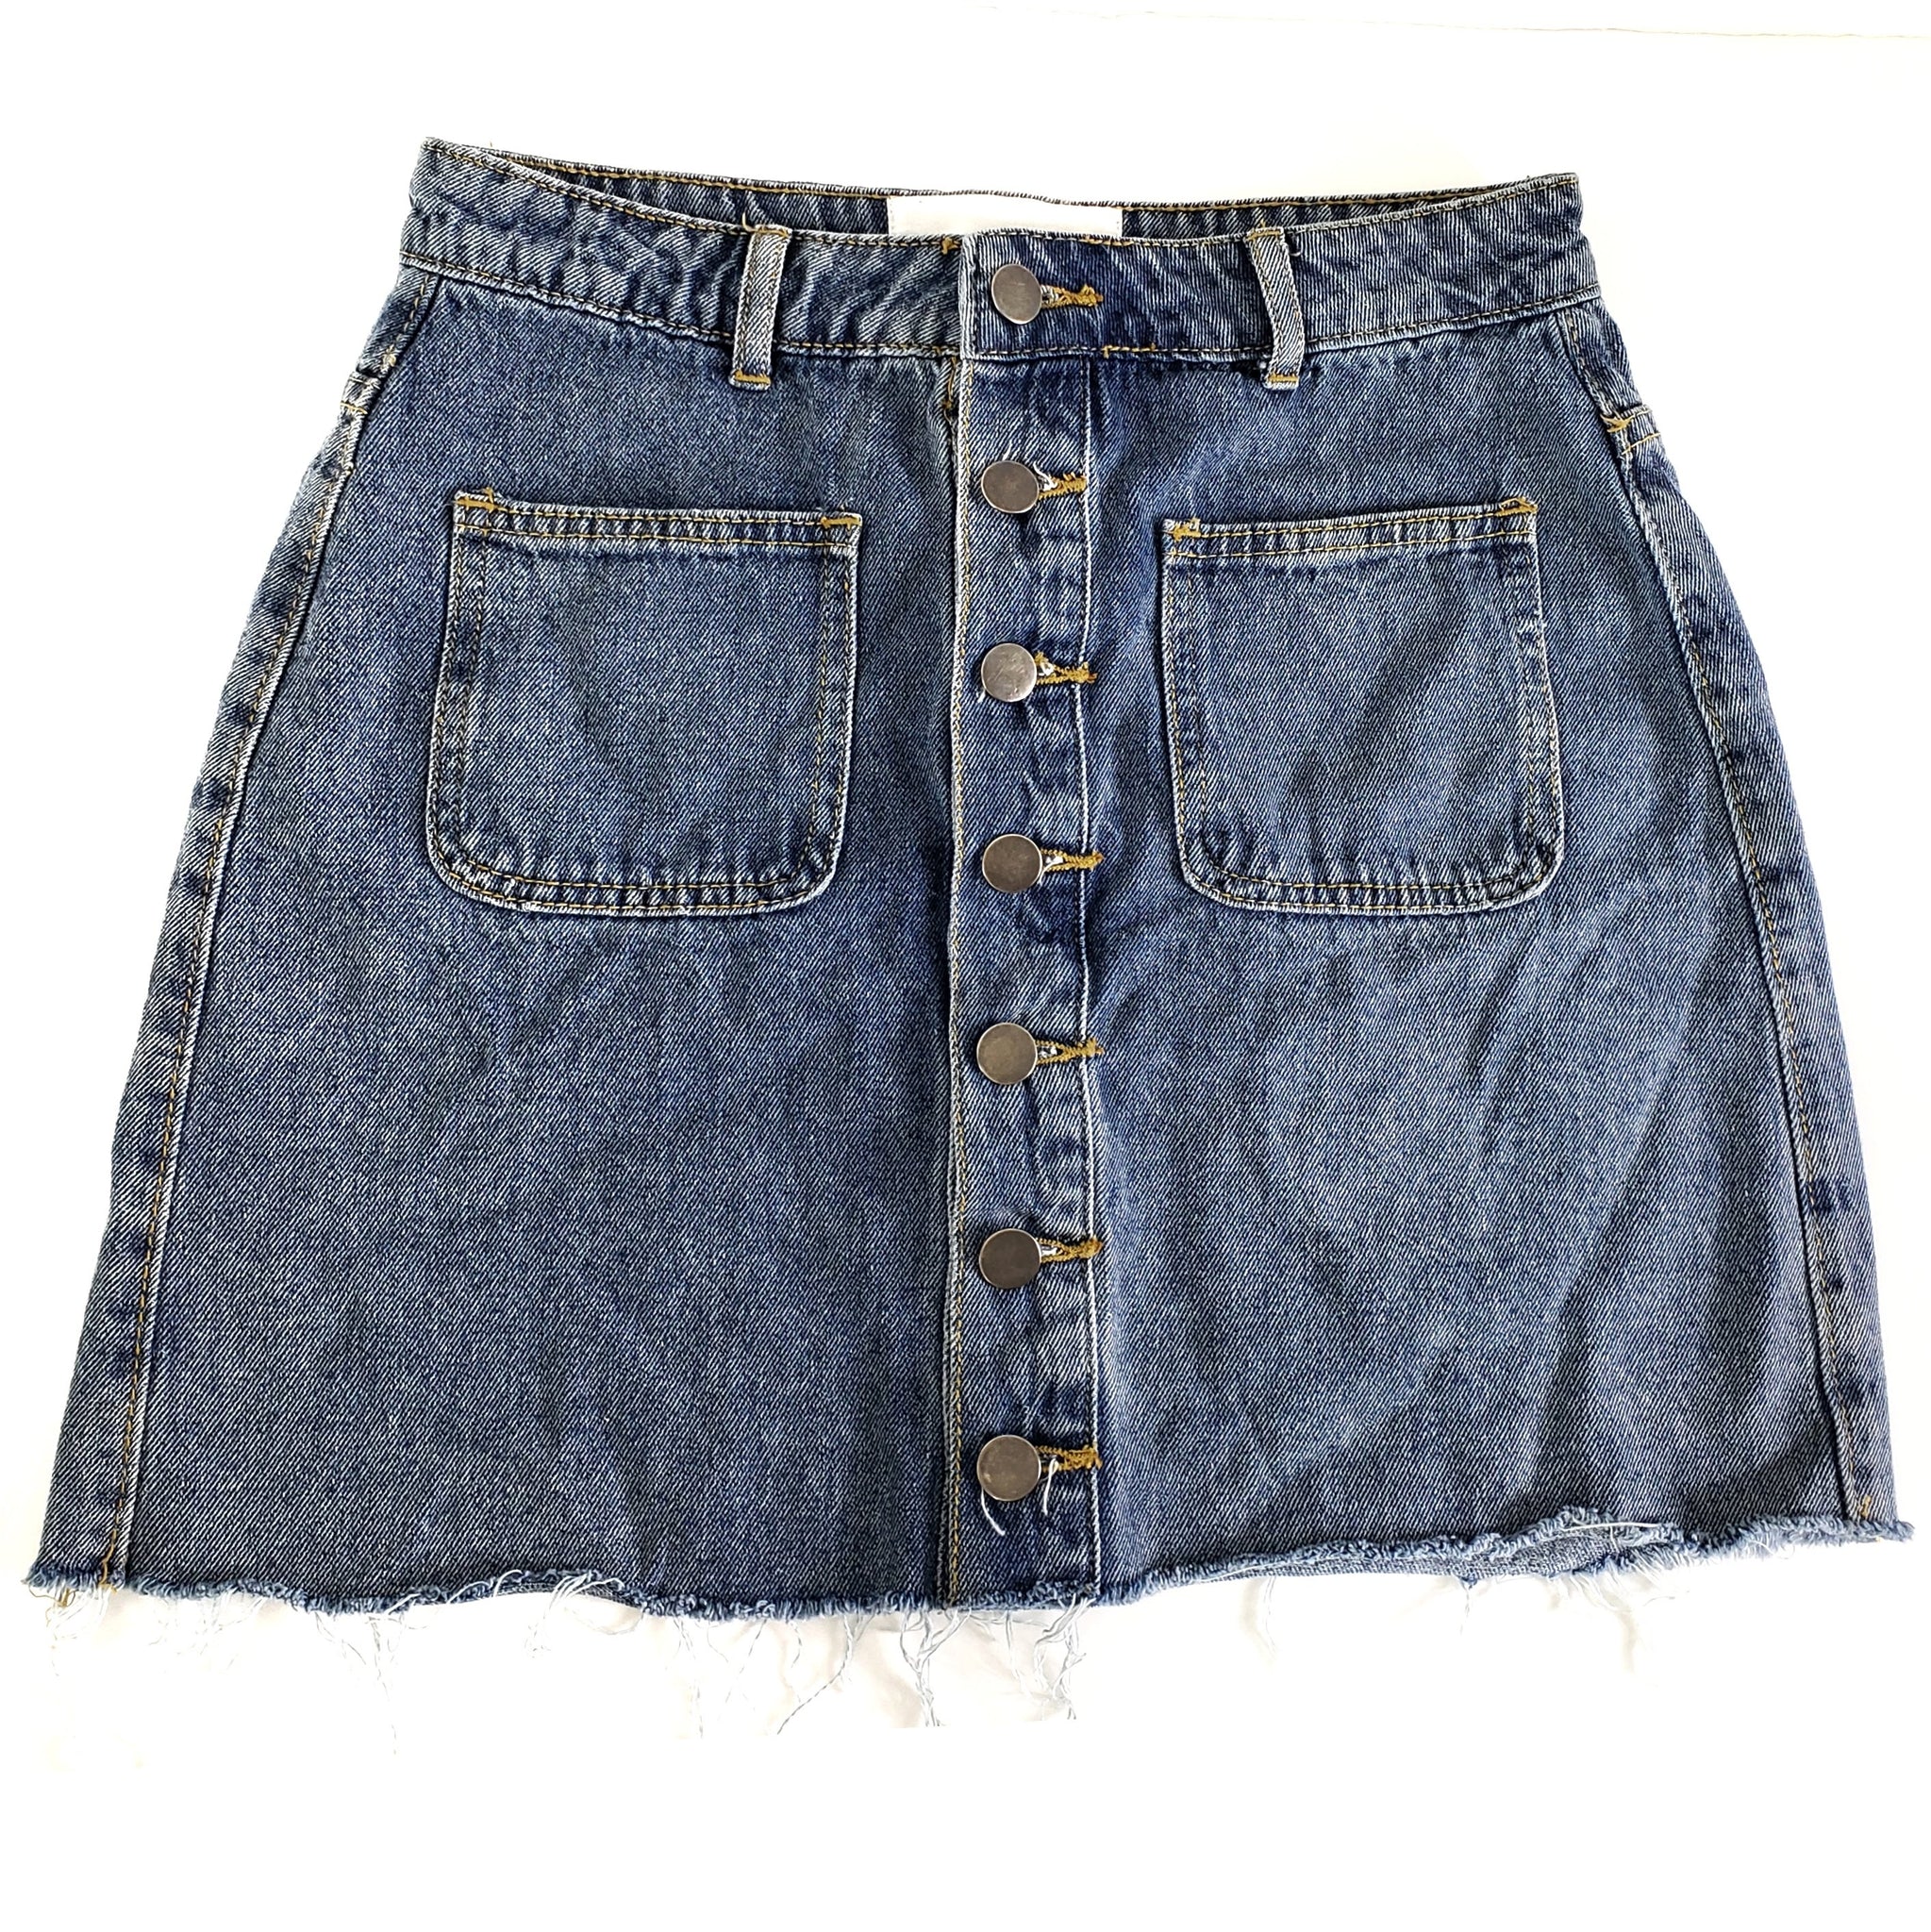 Newbury Kustom Button Front Jean Skirt Size Small